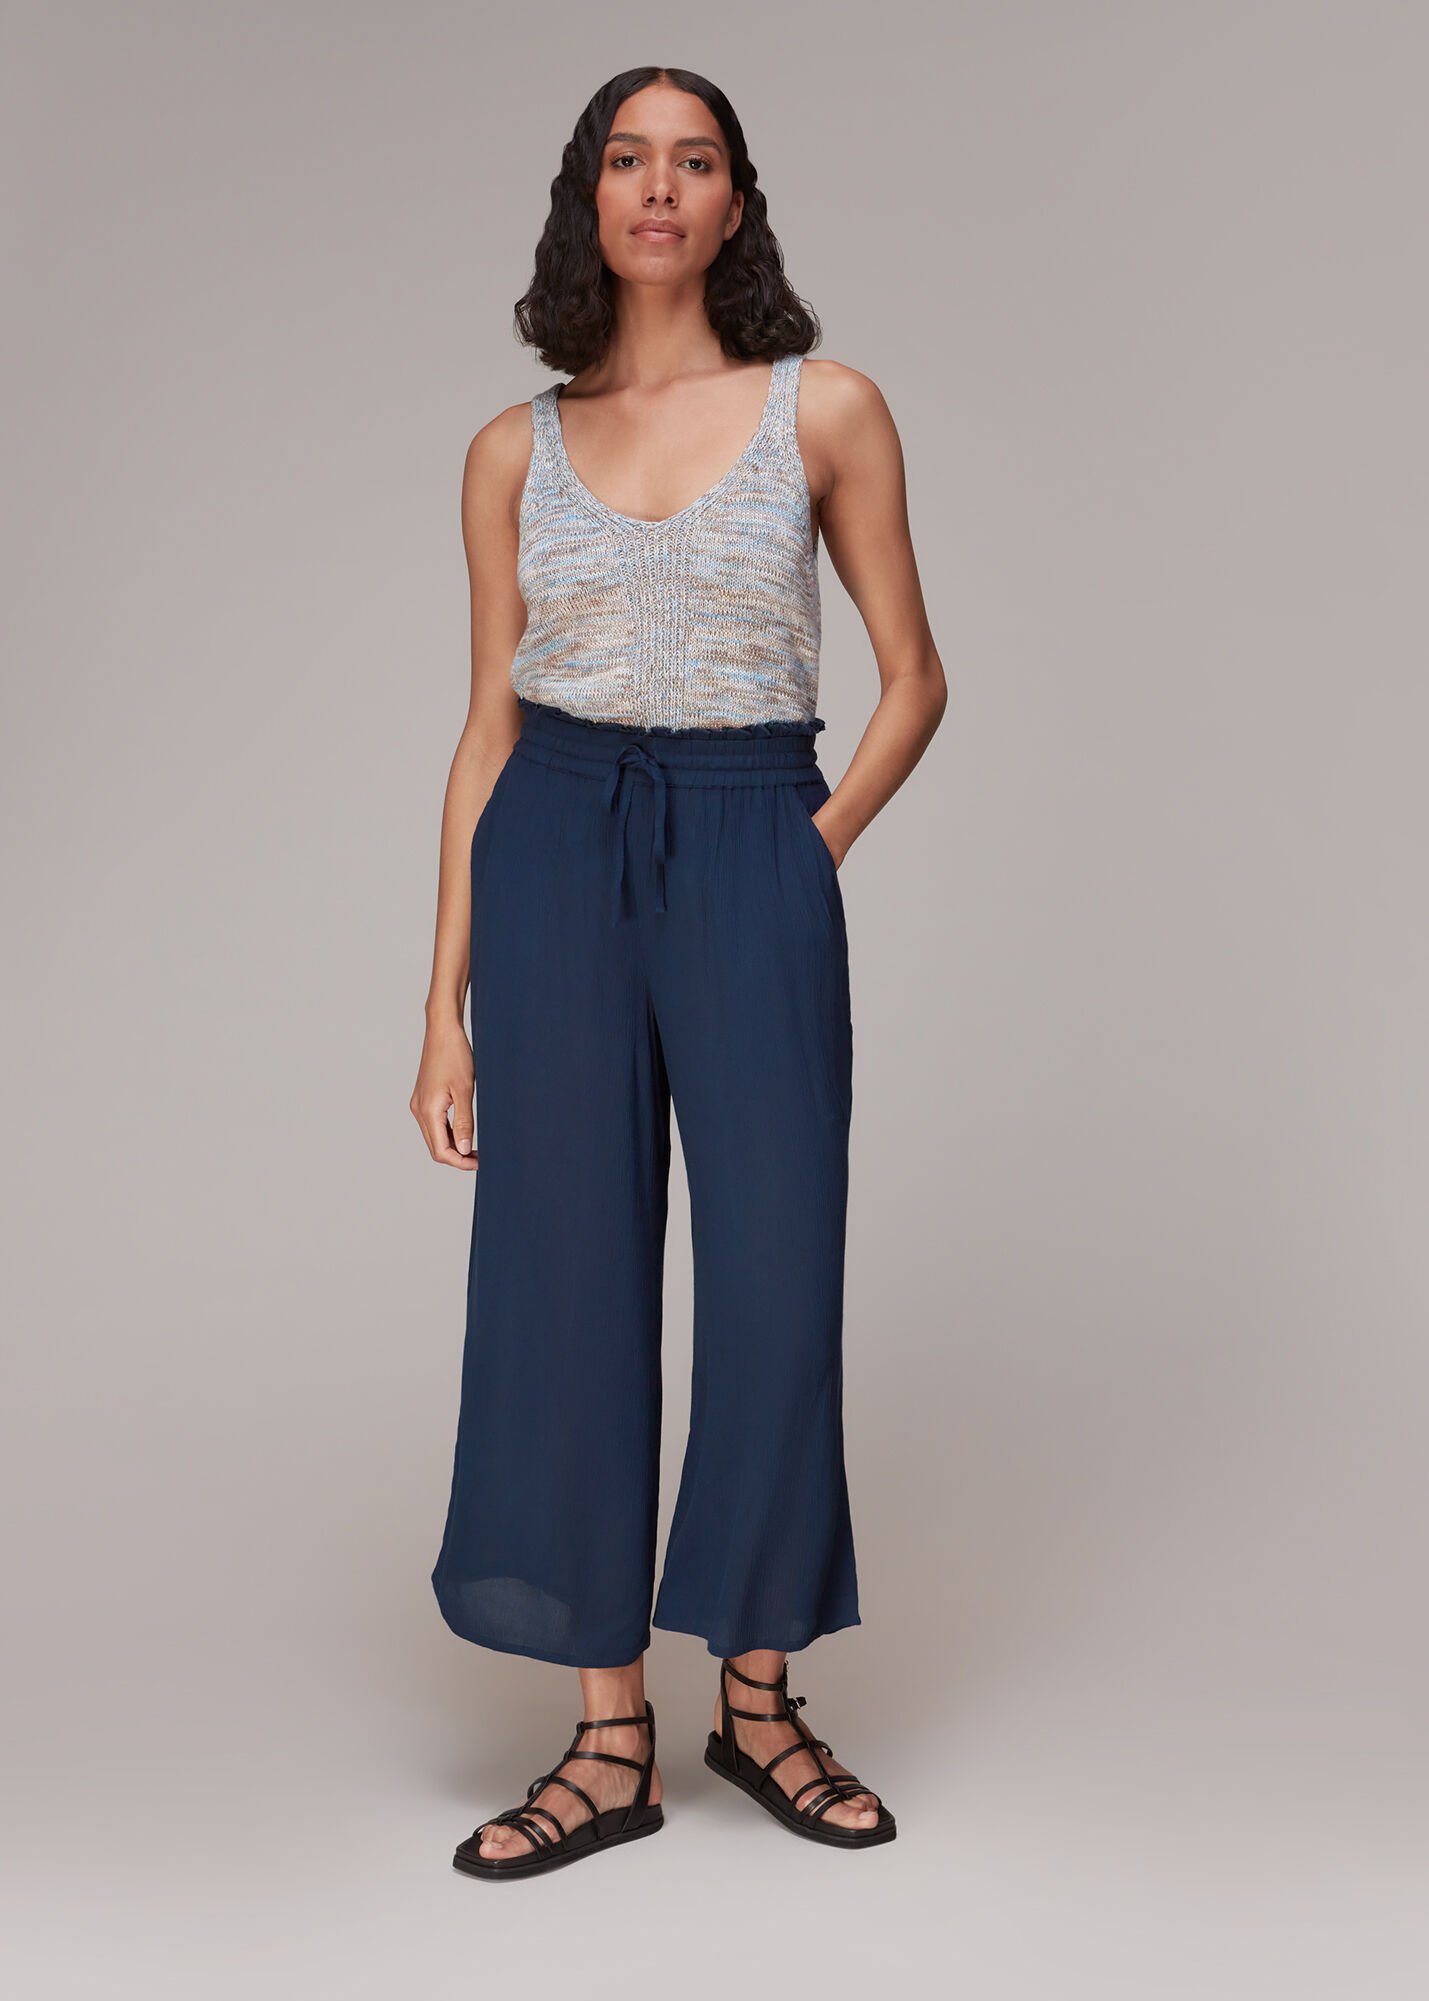 Buy Women Navy Blue Regular Fit Solid Cropped Trousers online  Looksgudin